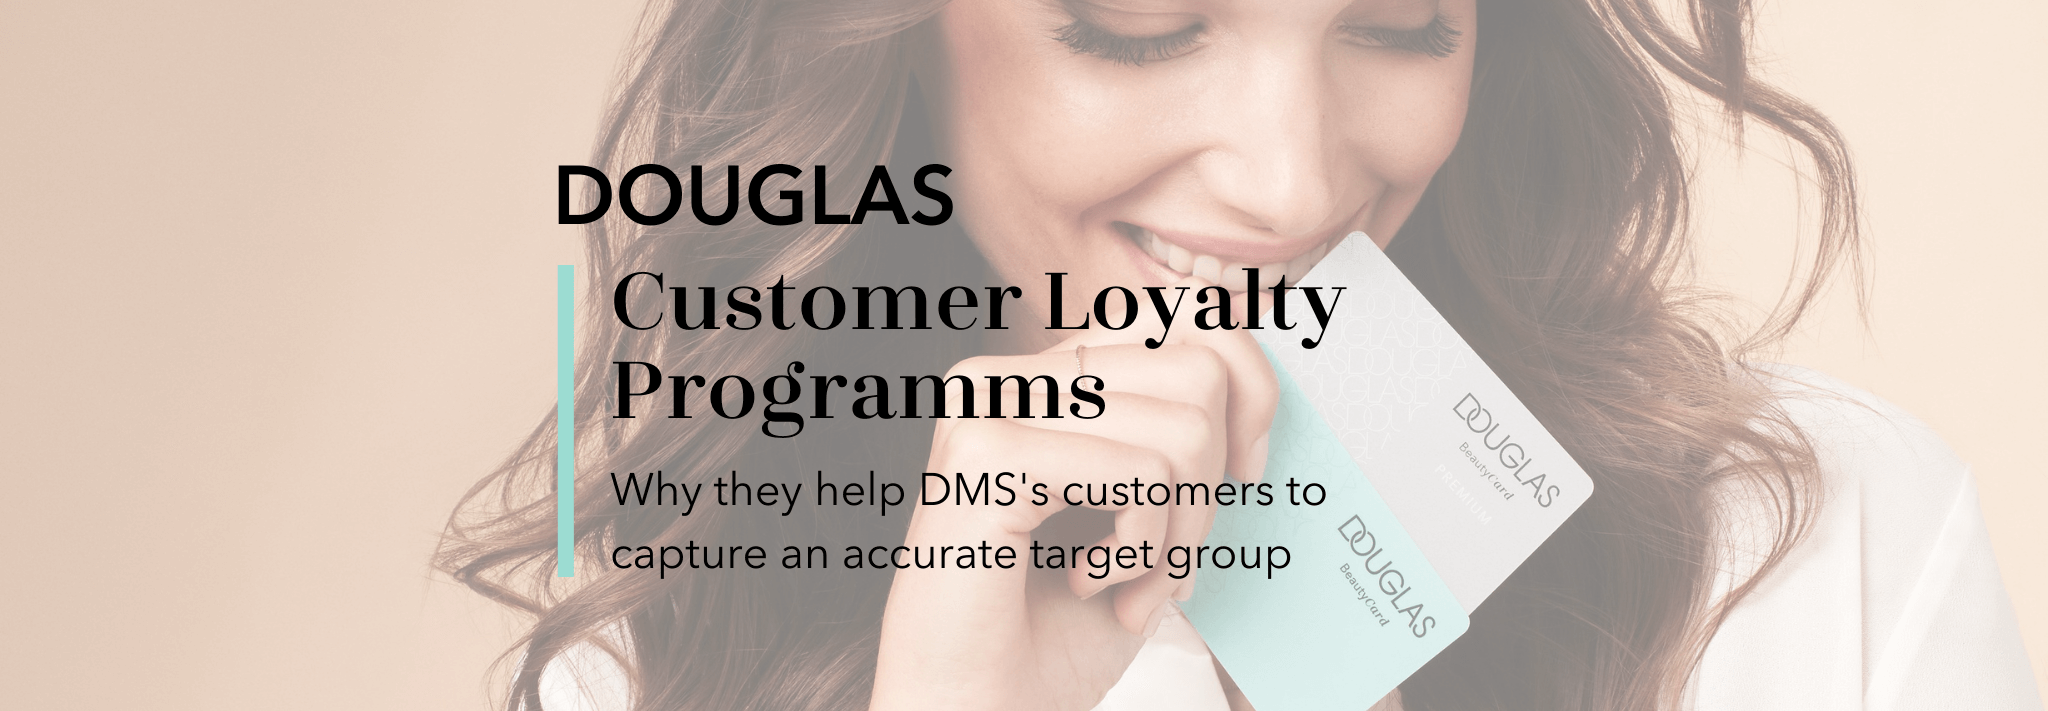 Douglas Customer Loyalty Programme